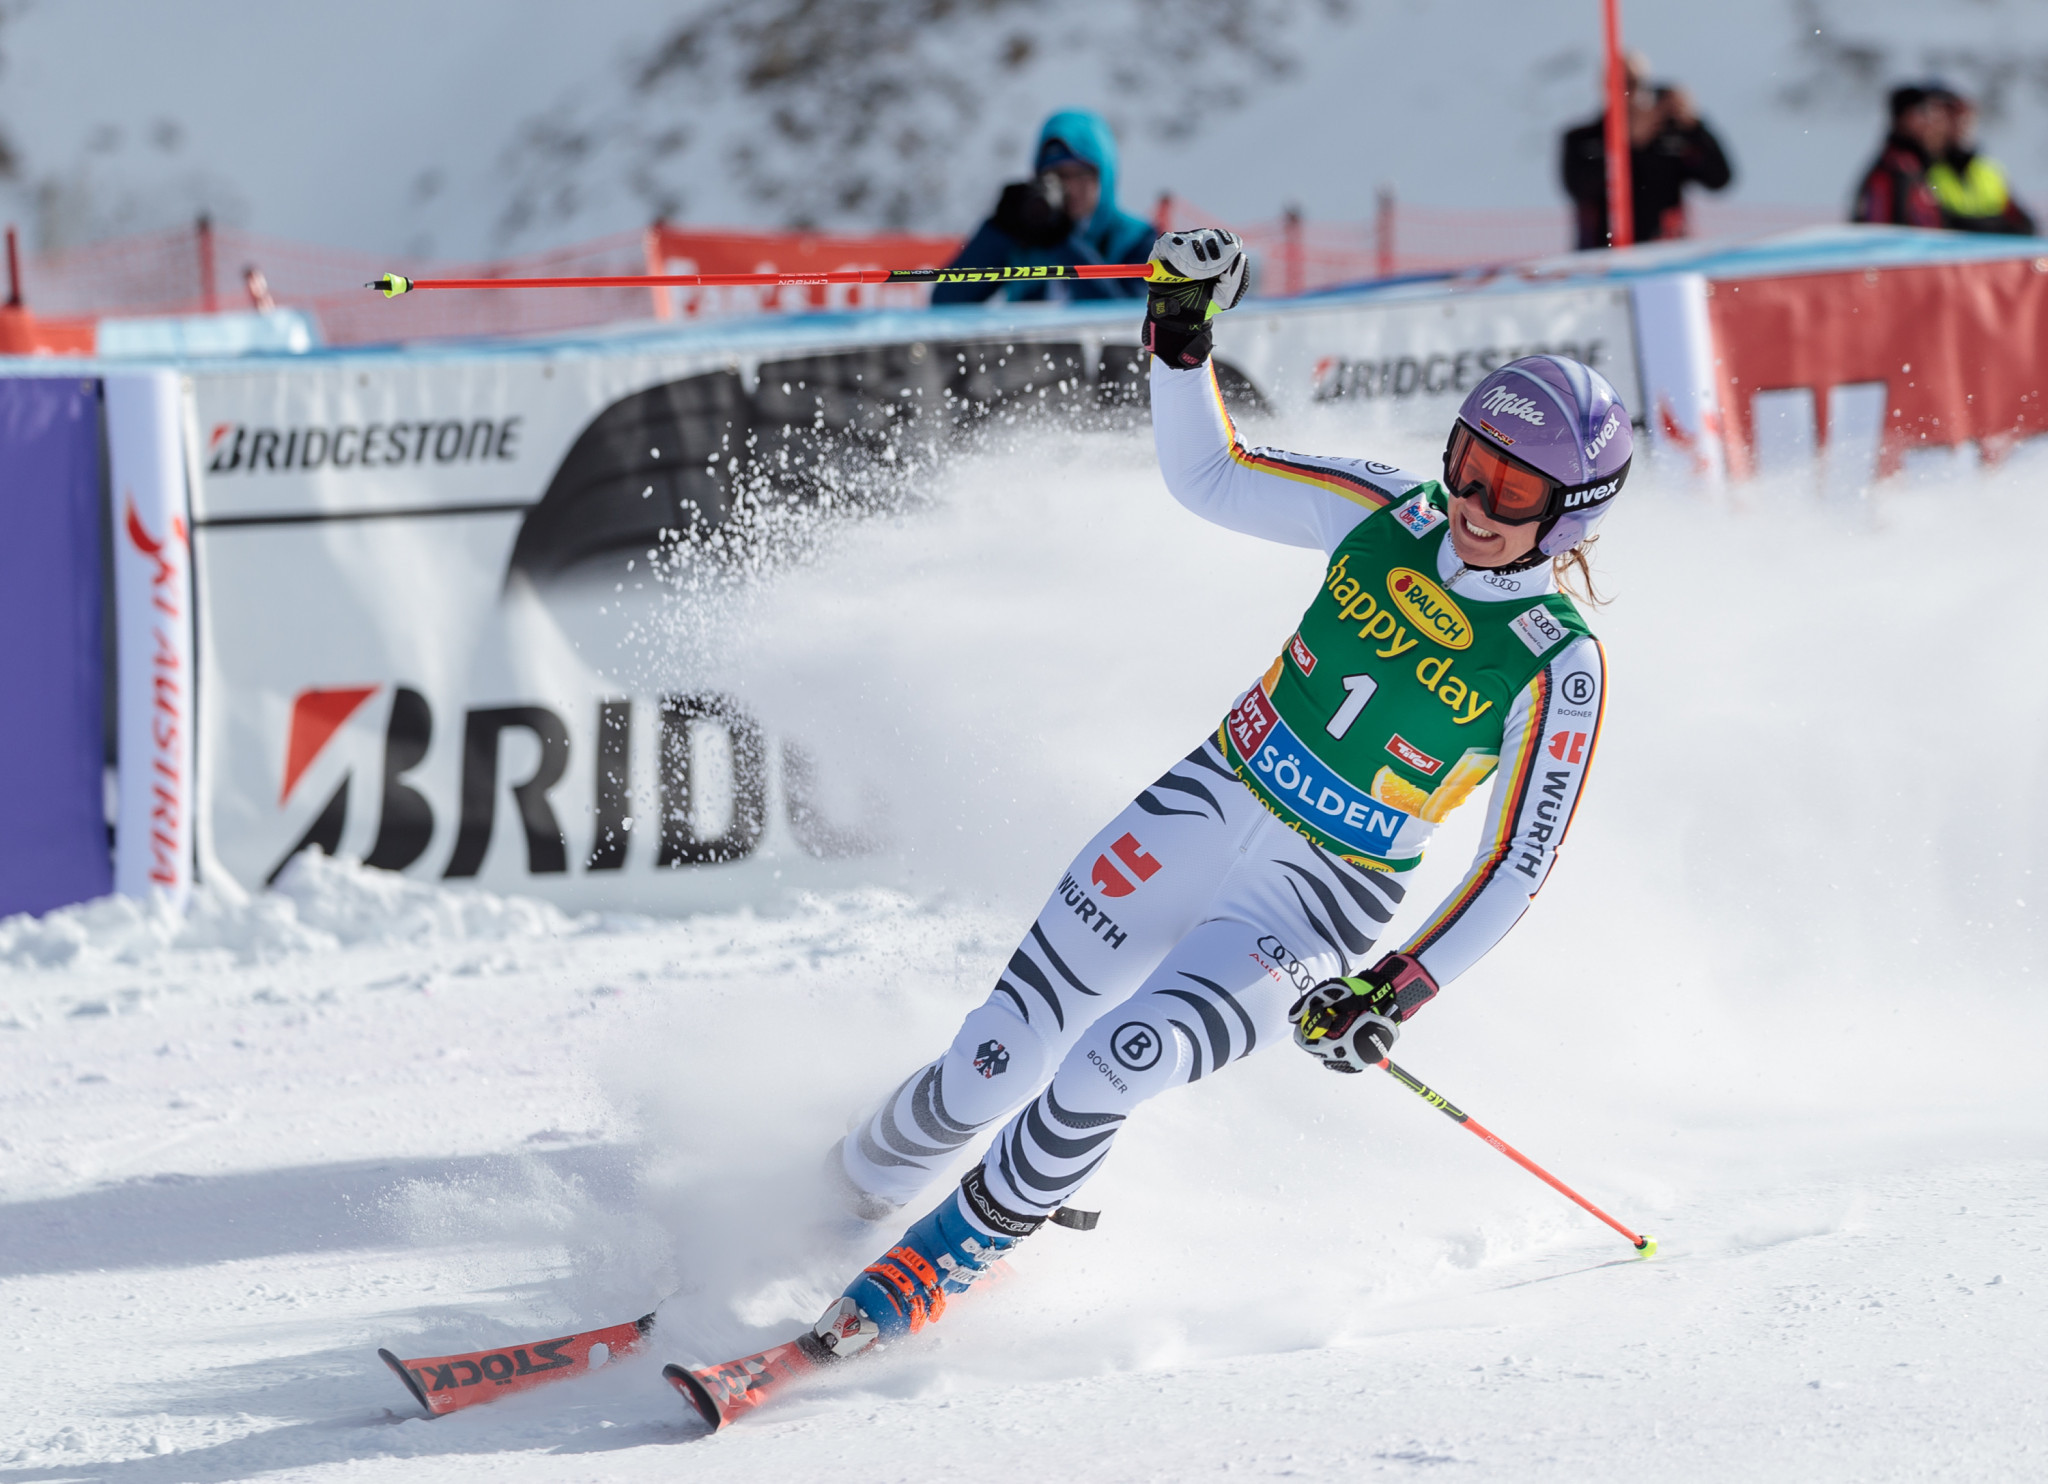 Germany's Rebensburg wins season-opening giant slalom at FIS Alpine Skiing World Cup in Soelden